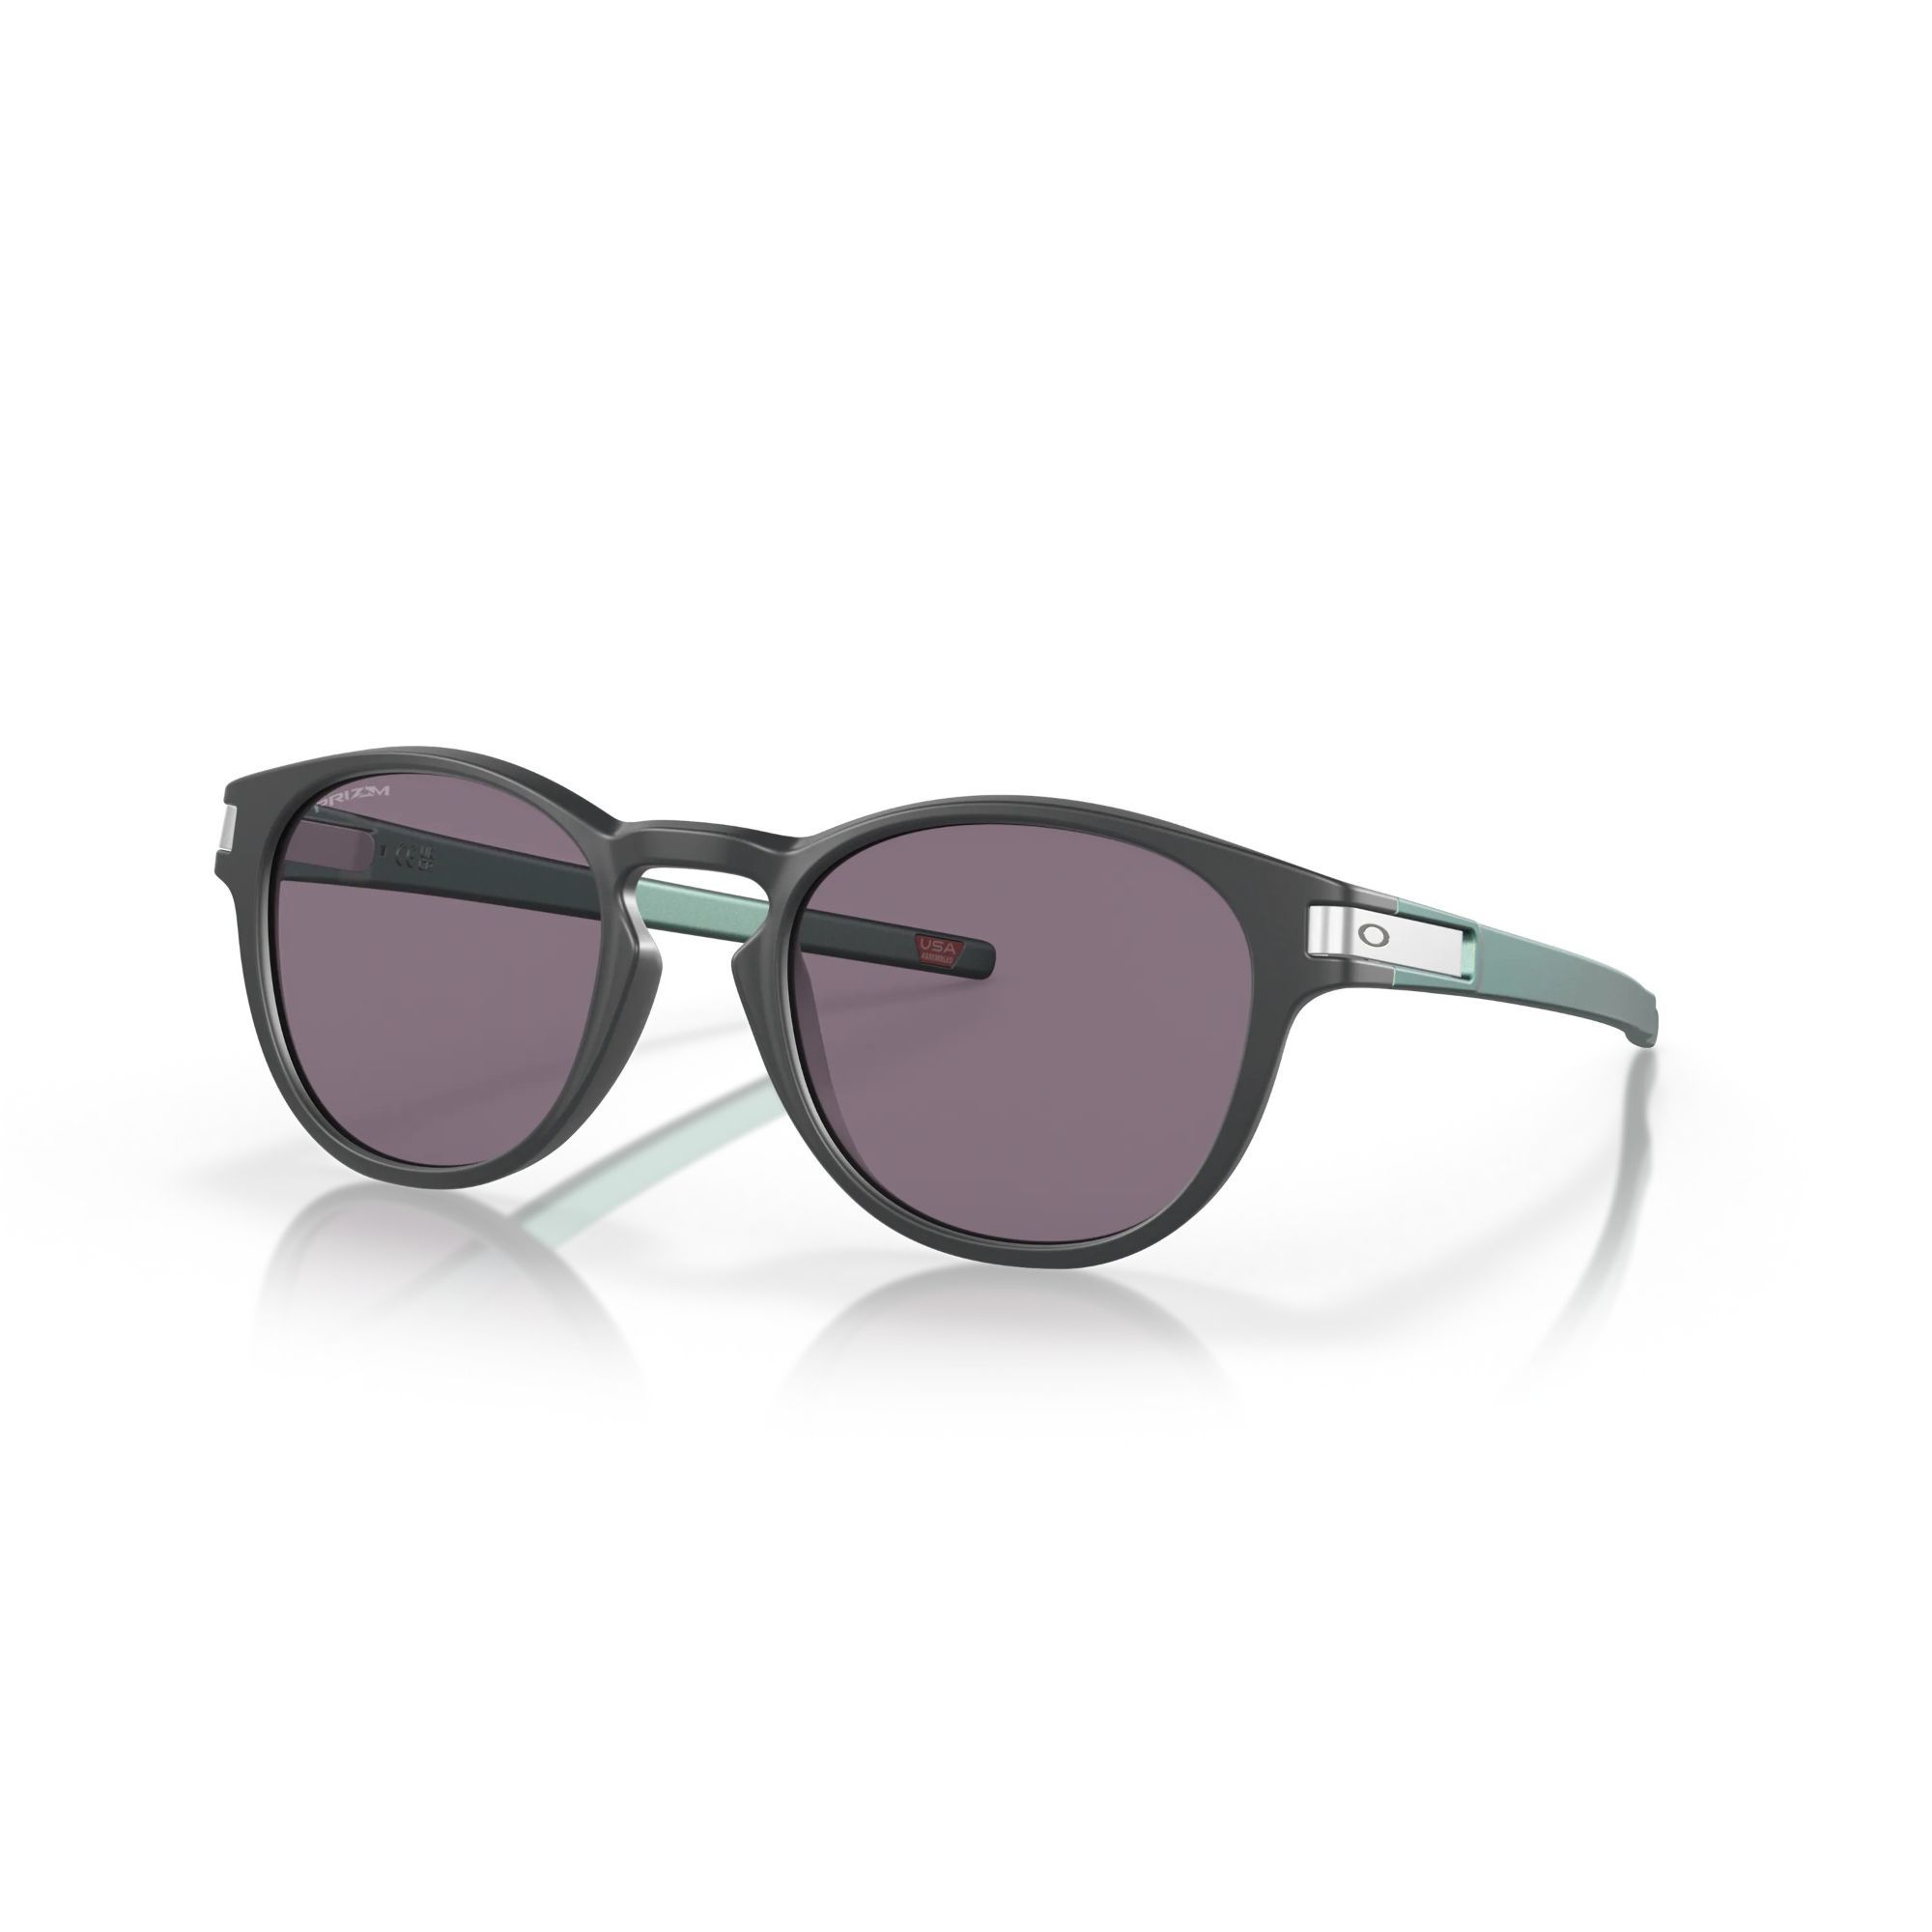 Latch Sunglasses OO9265-63 size 53